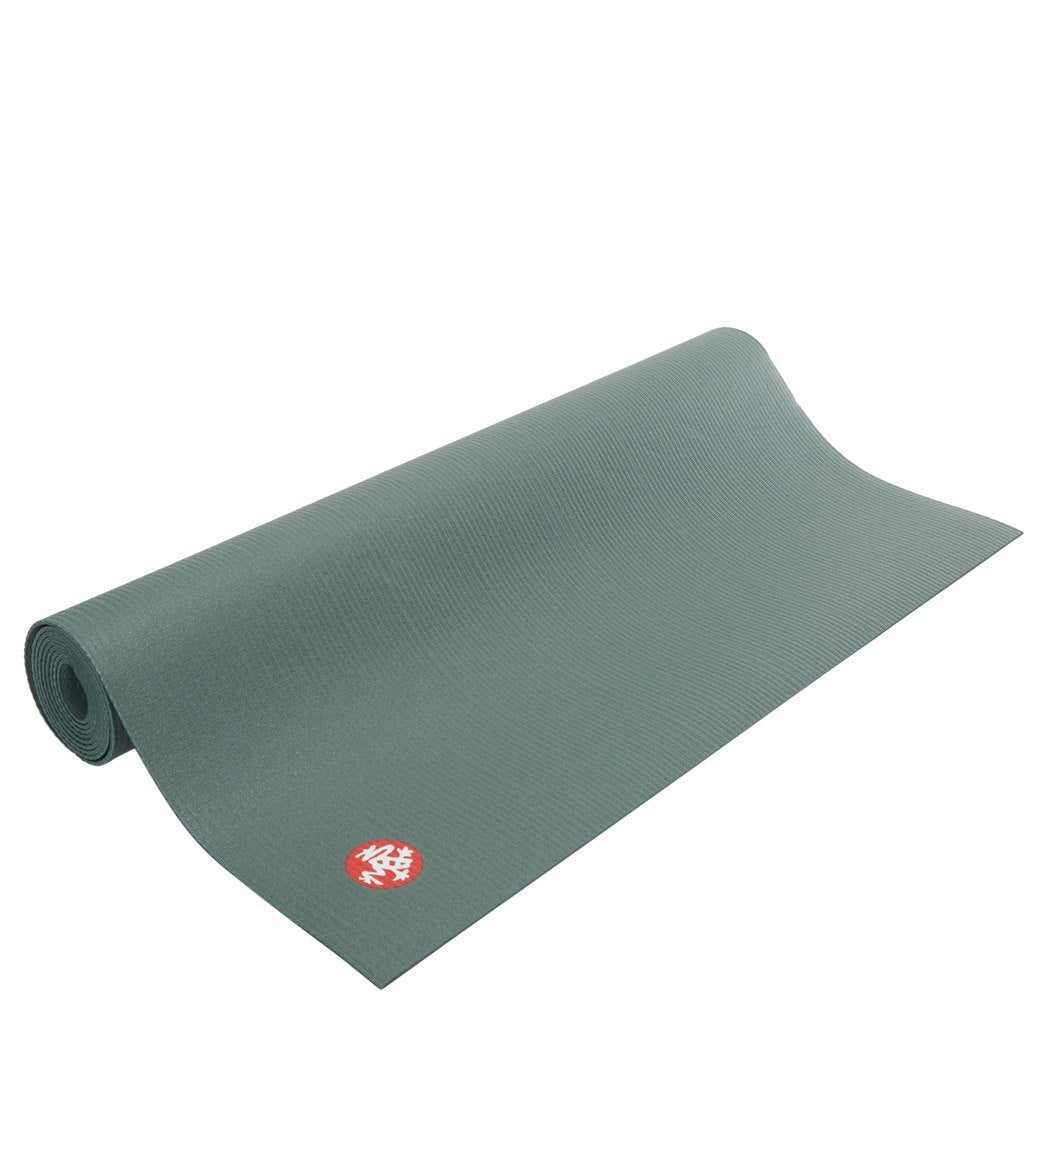 Manduka PRO Yoga Mat – Premium 6mm Thick Mat, Eco Friendly, 71 x